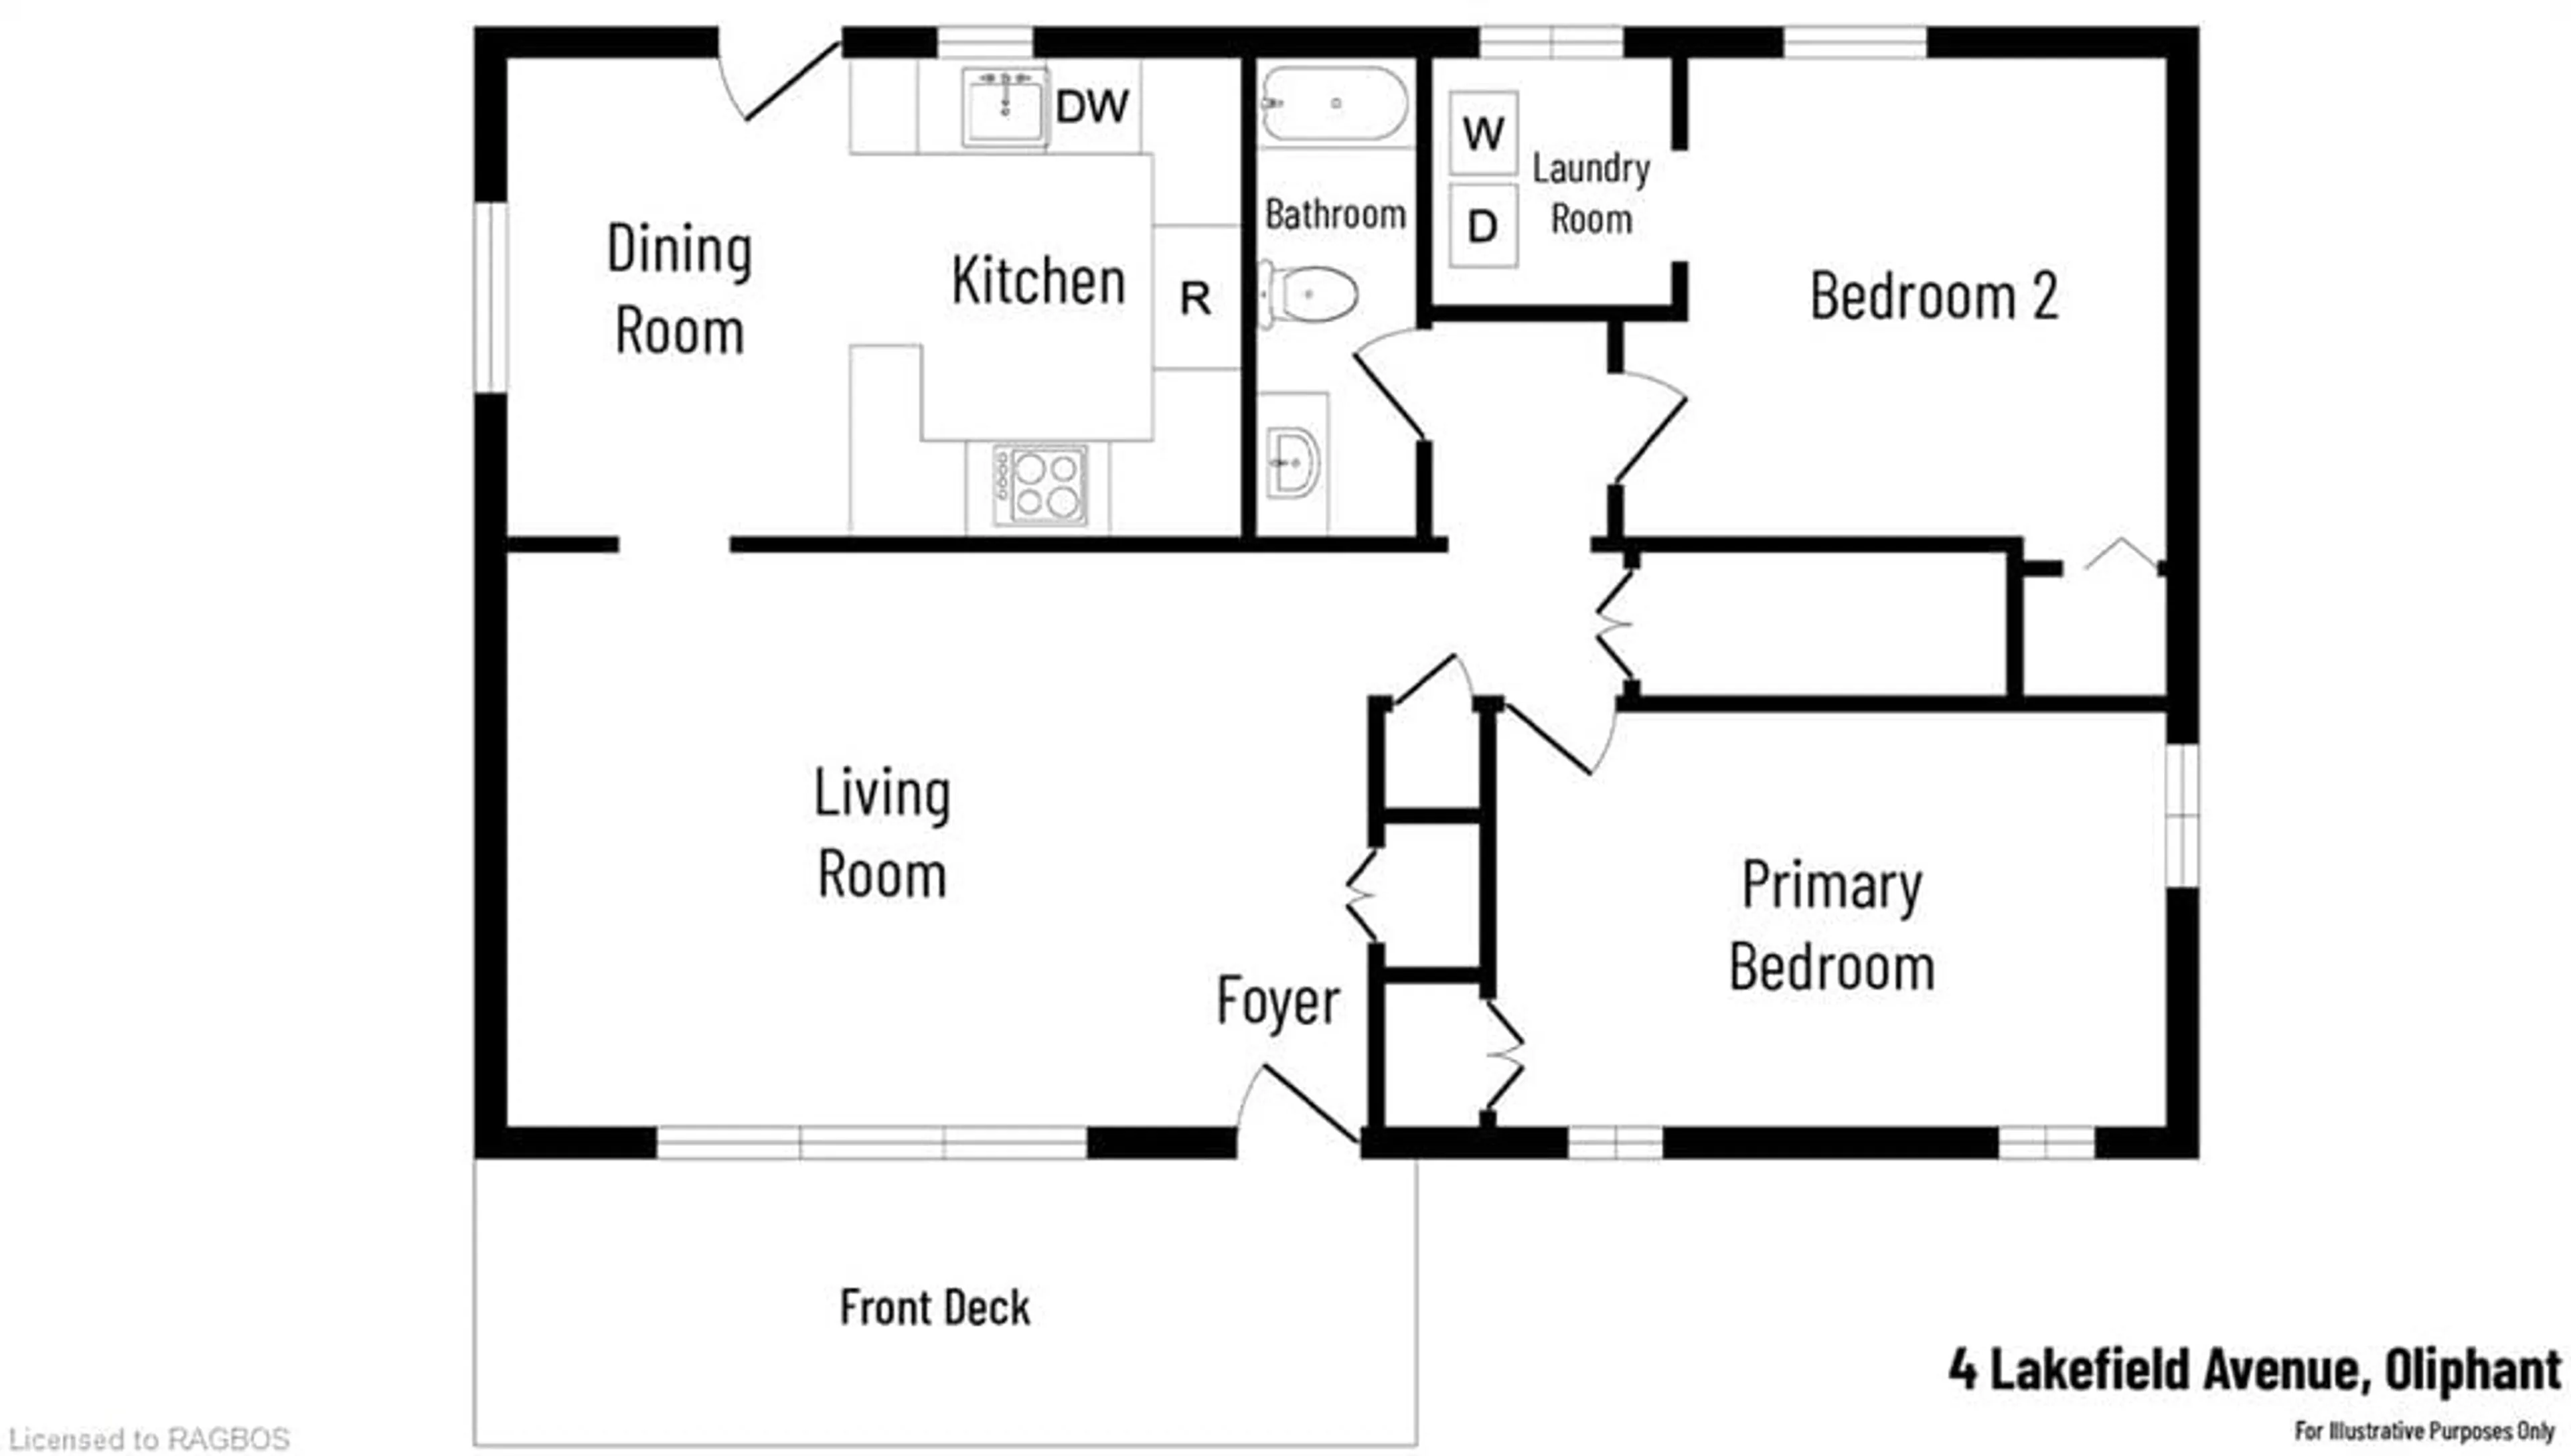 Floor plan for 4 Lakefield Ave, South Bruce Peninsula Ontario N0H 2T0